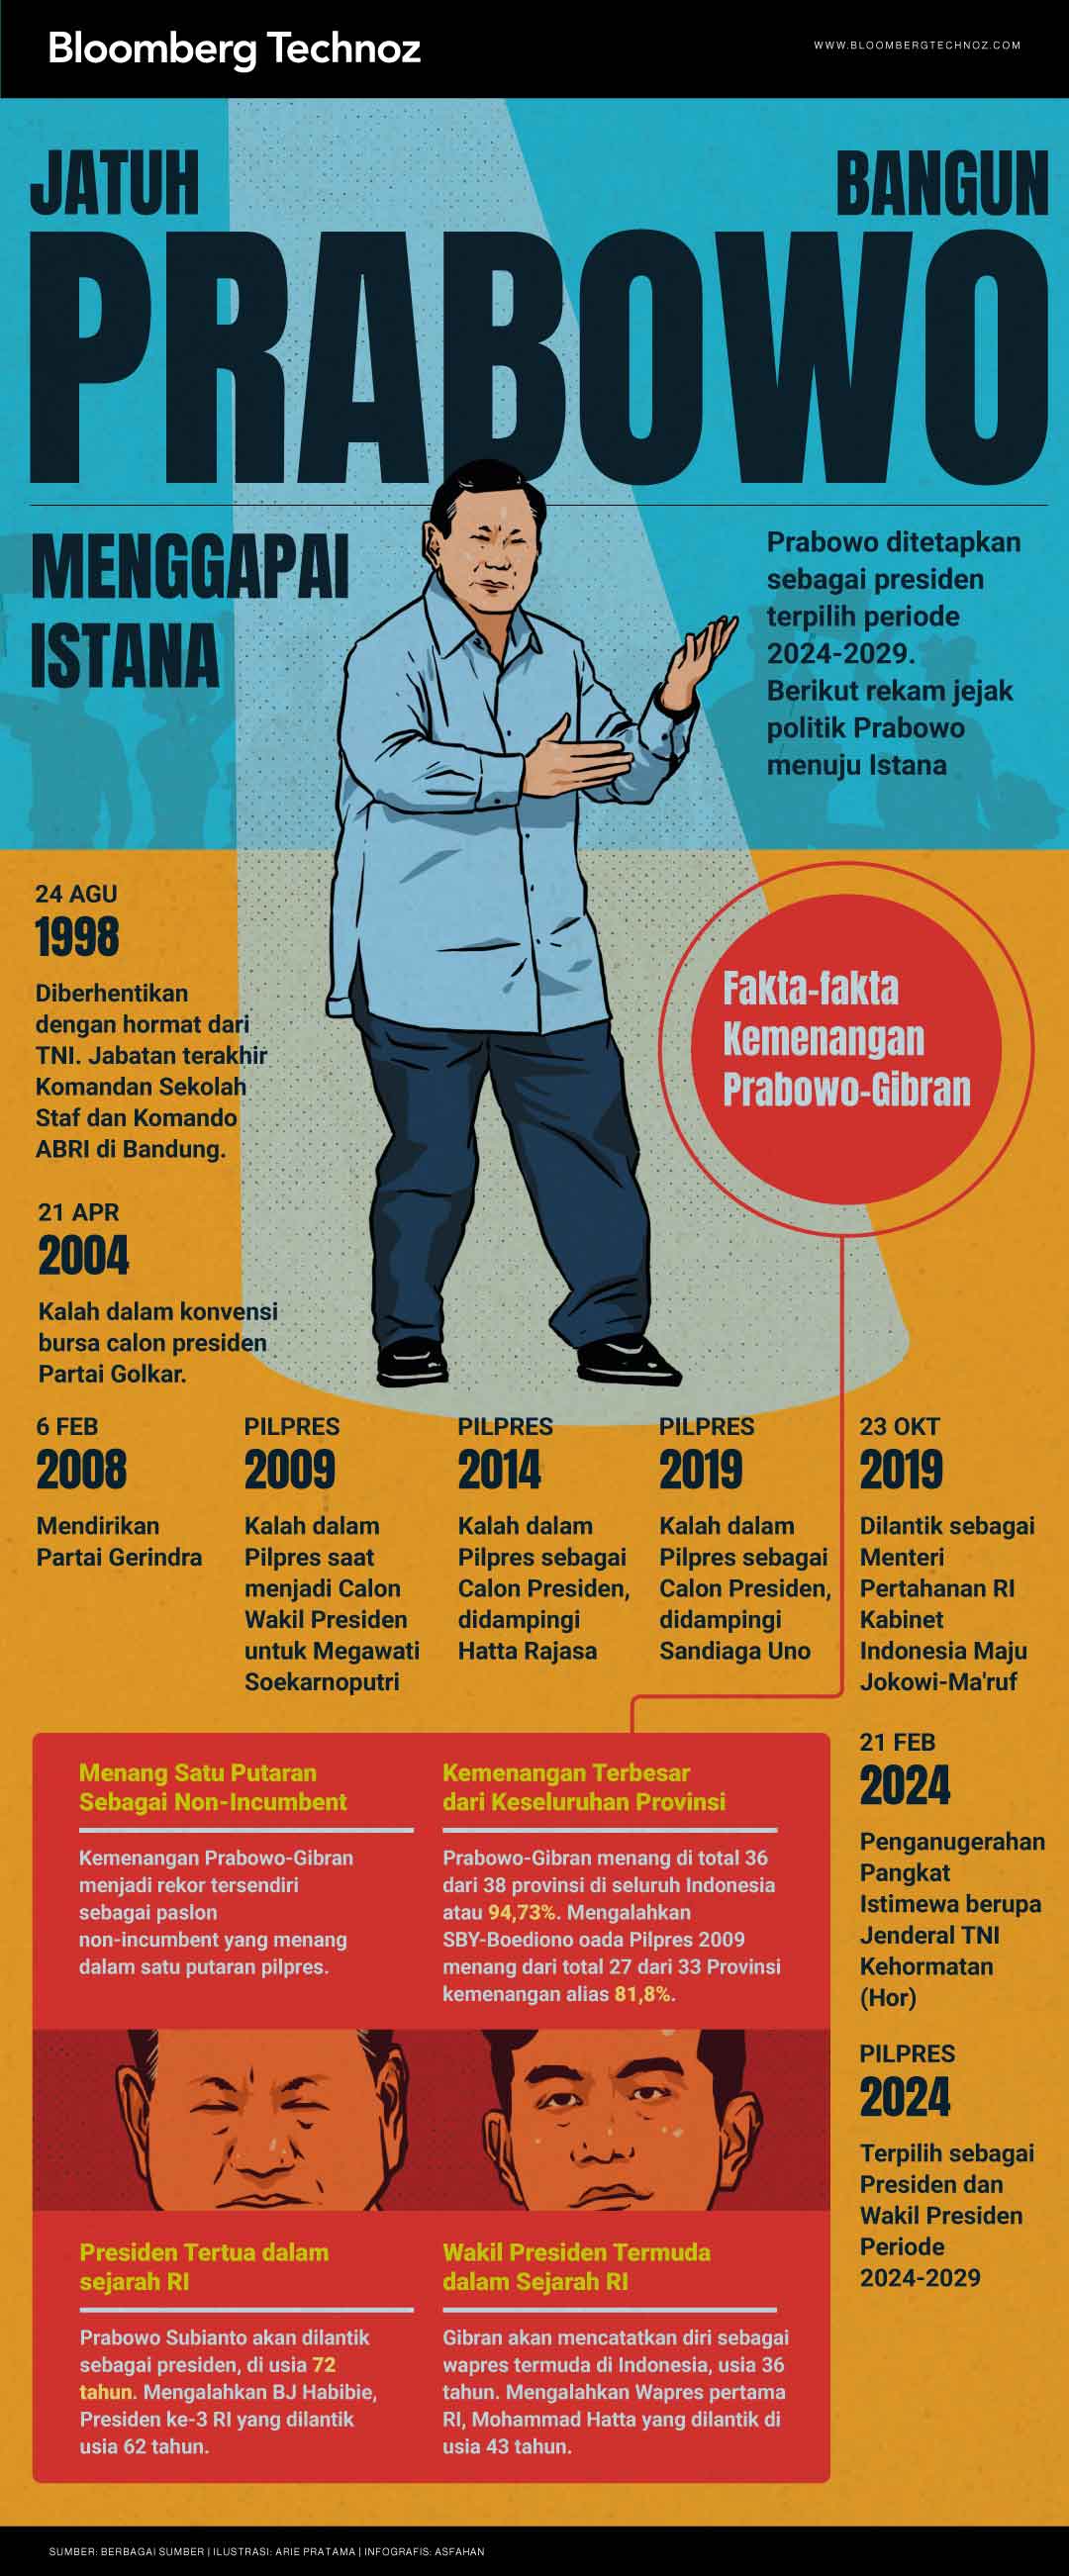 Jatuh Bangun Prabowo Menggapai Istana (Bloomberg Technoz)